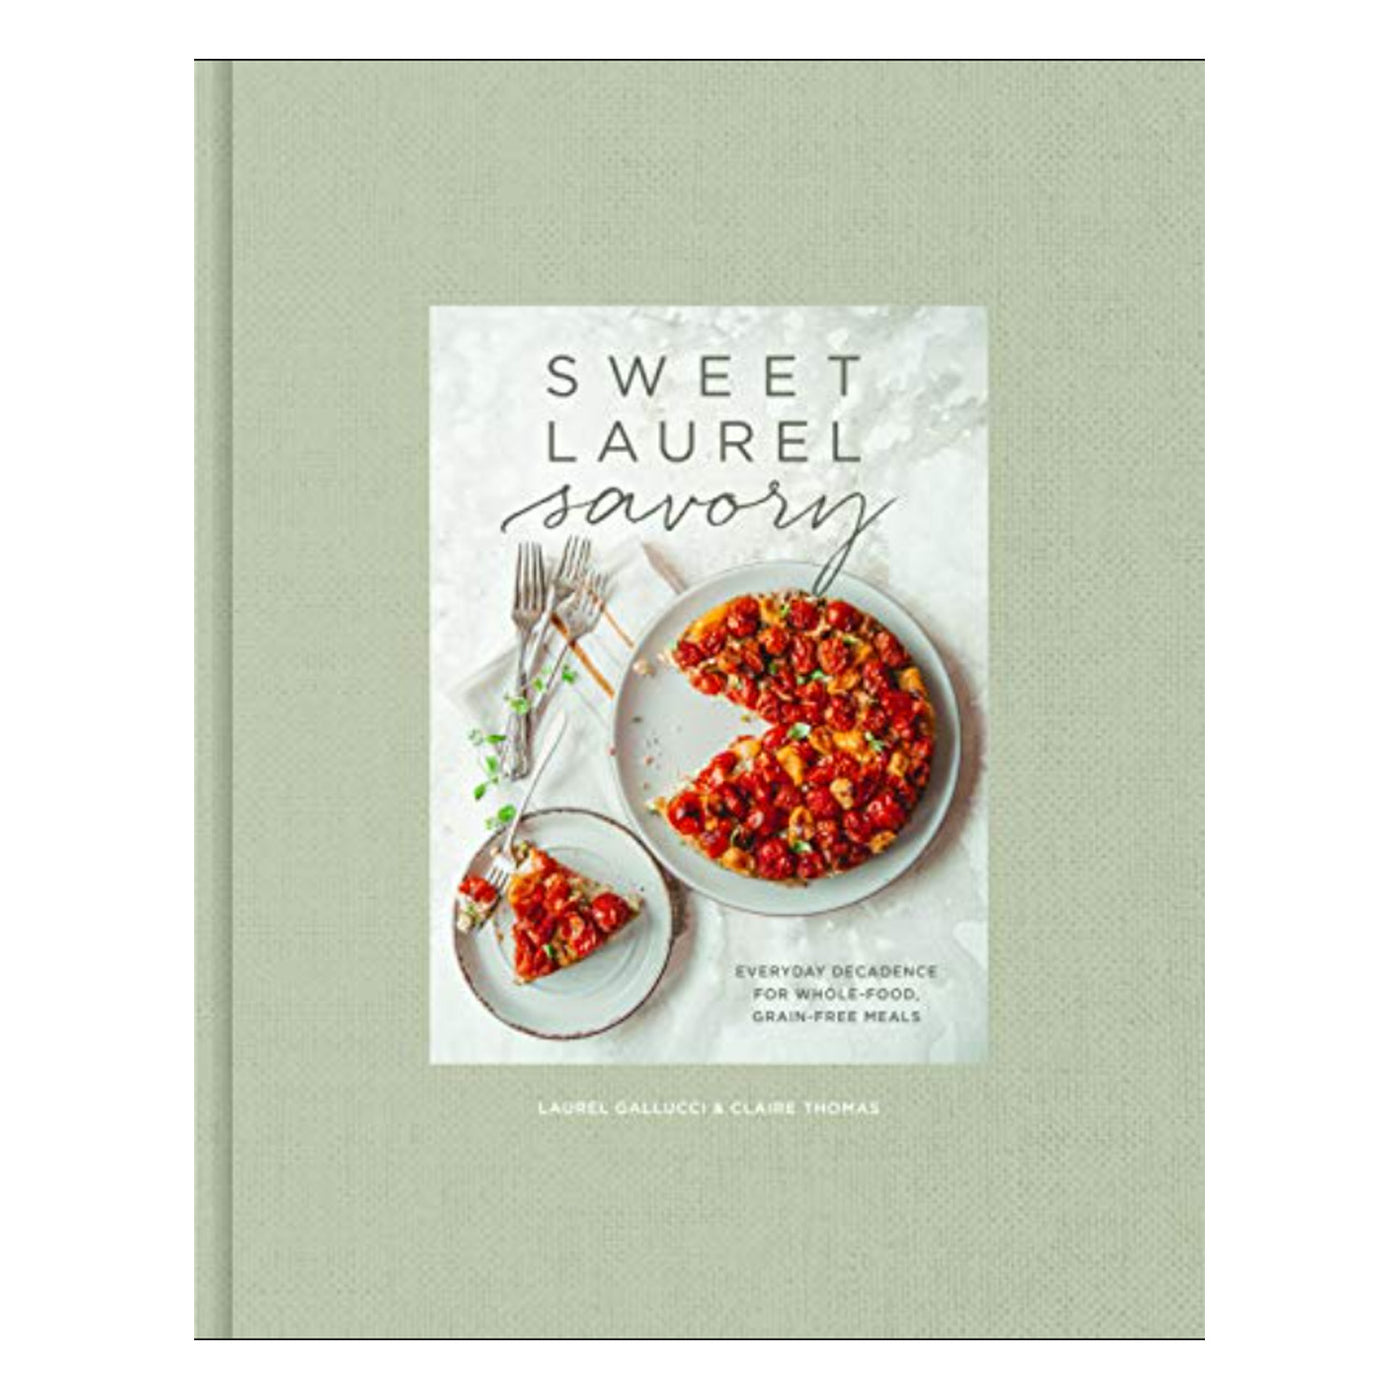 Cookbook titled Sweet Laurel Savory